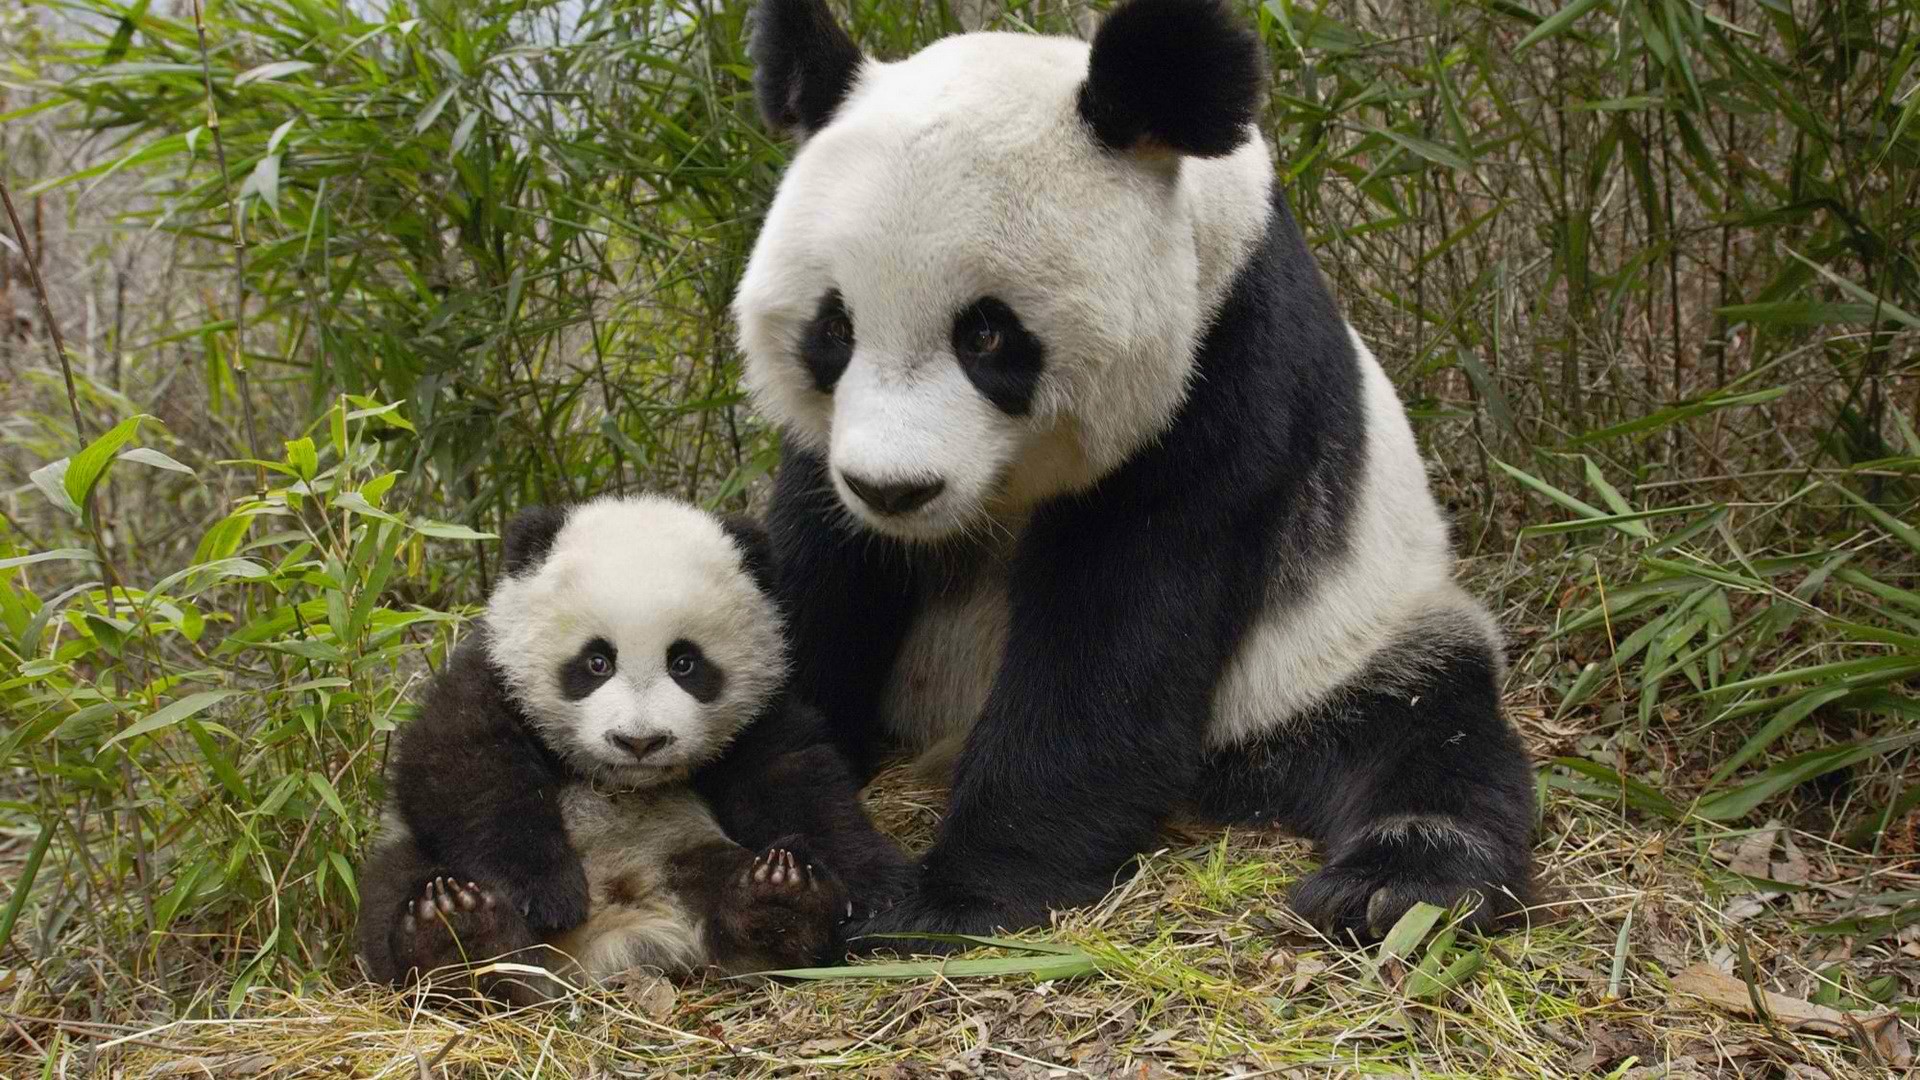 General 1920x1080 animals panda plants bears mammals baby animals